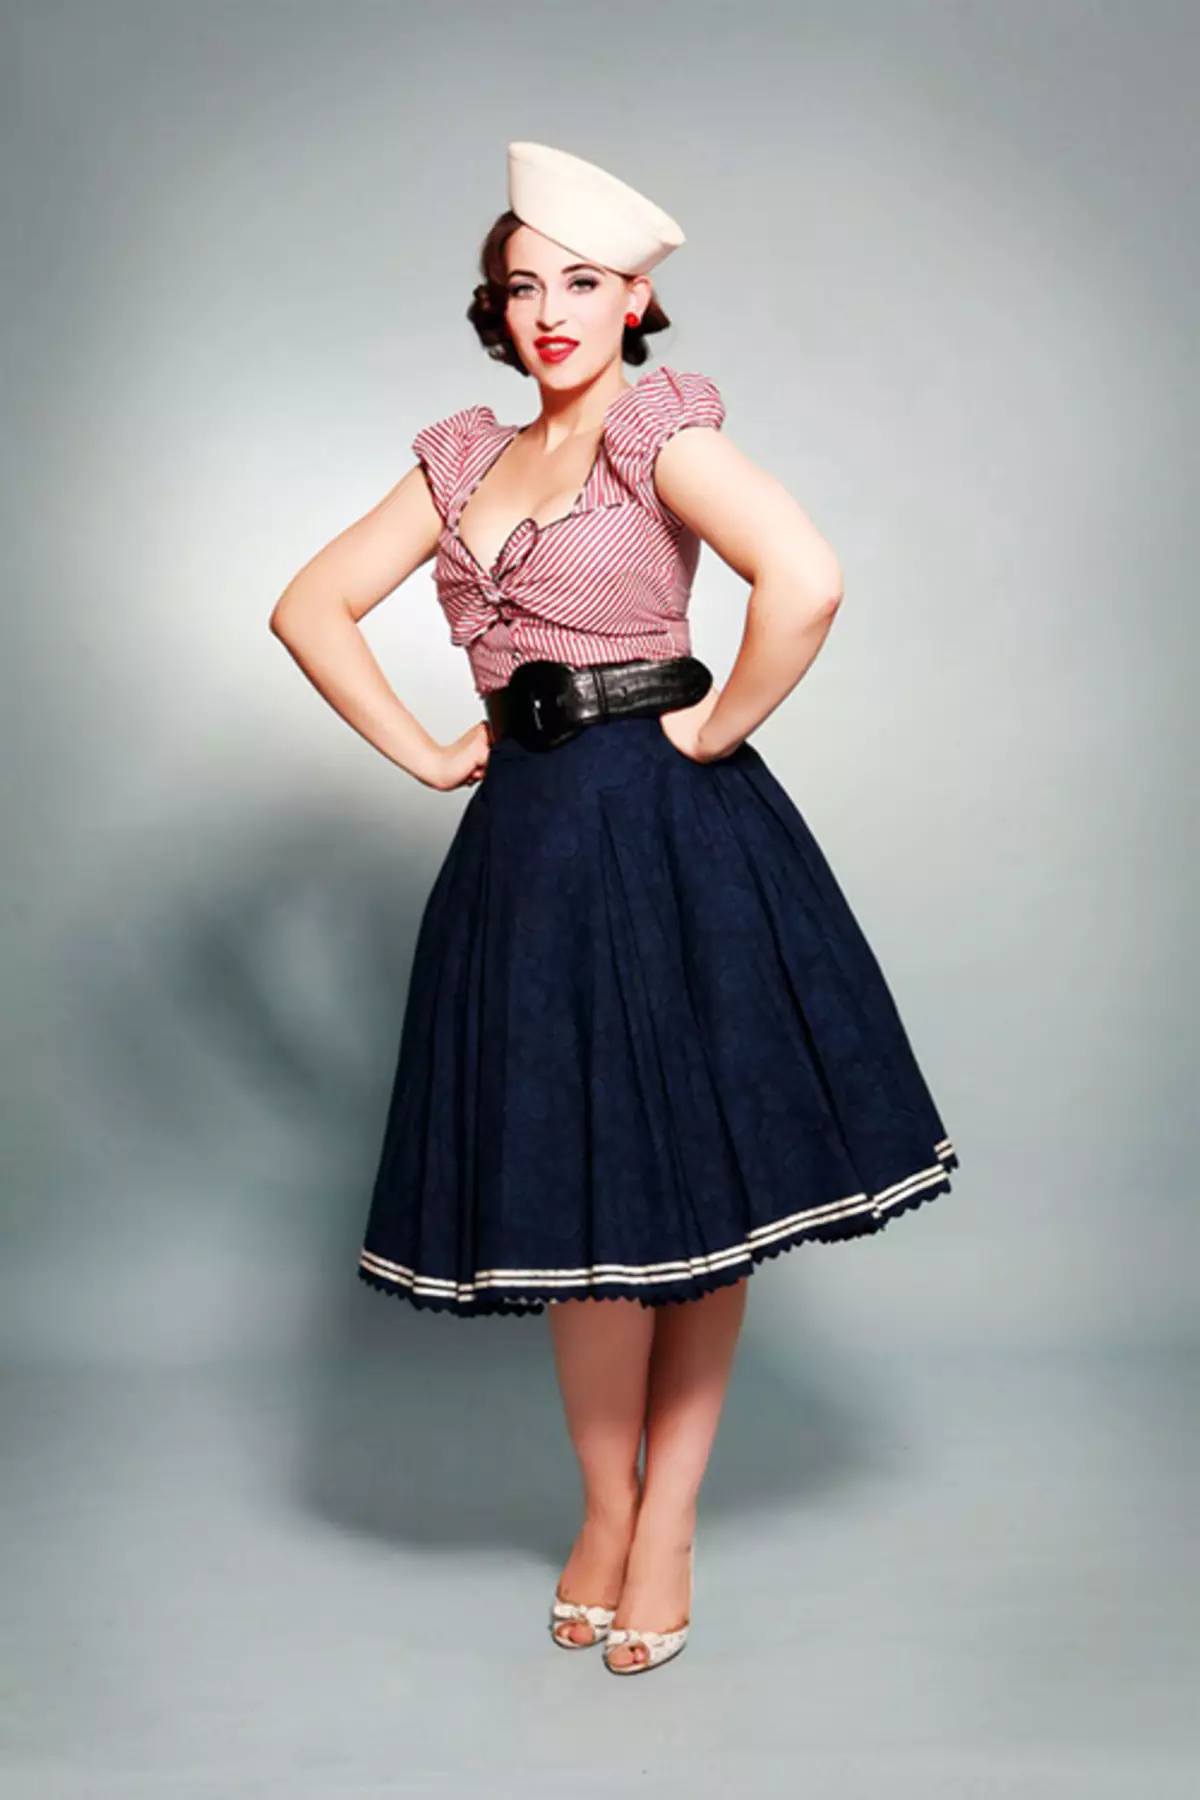 Ретро 60 х годов. Мода Стиляги 50-60. Платье в стиле 50-х годов. Образ в стиле 50-х годов. Пышная юбка в стиле 50-х.